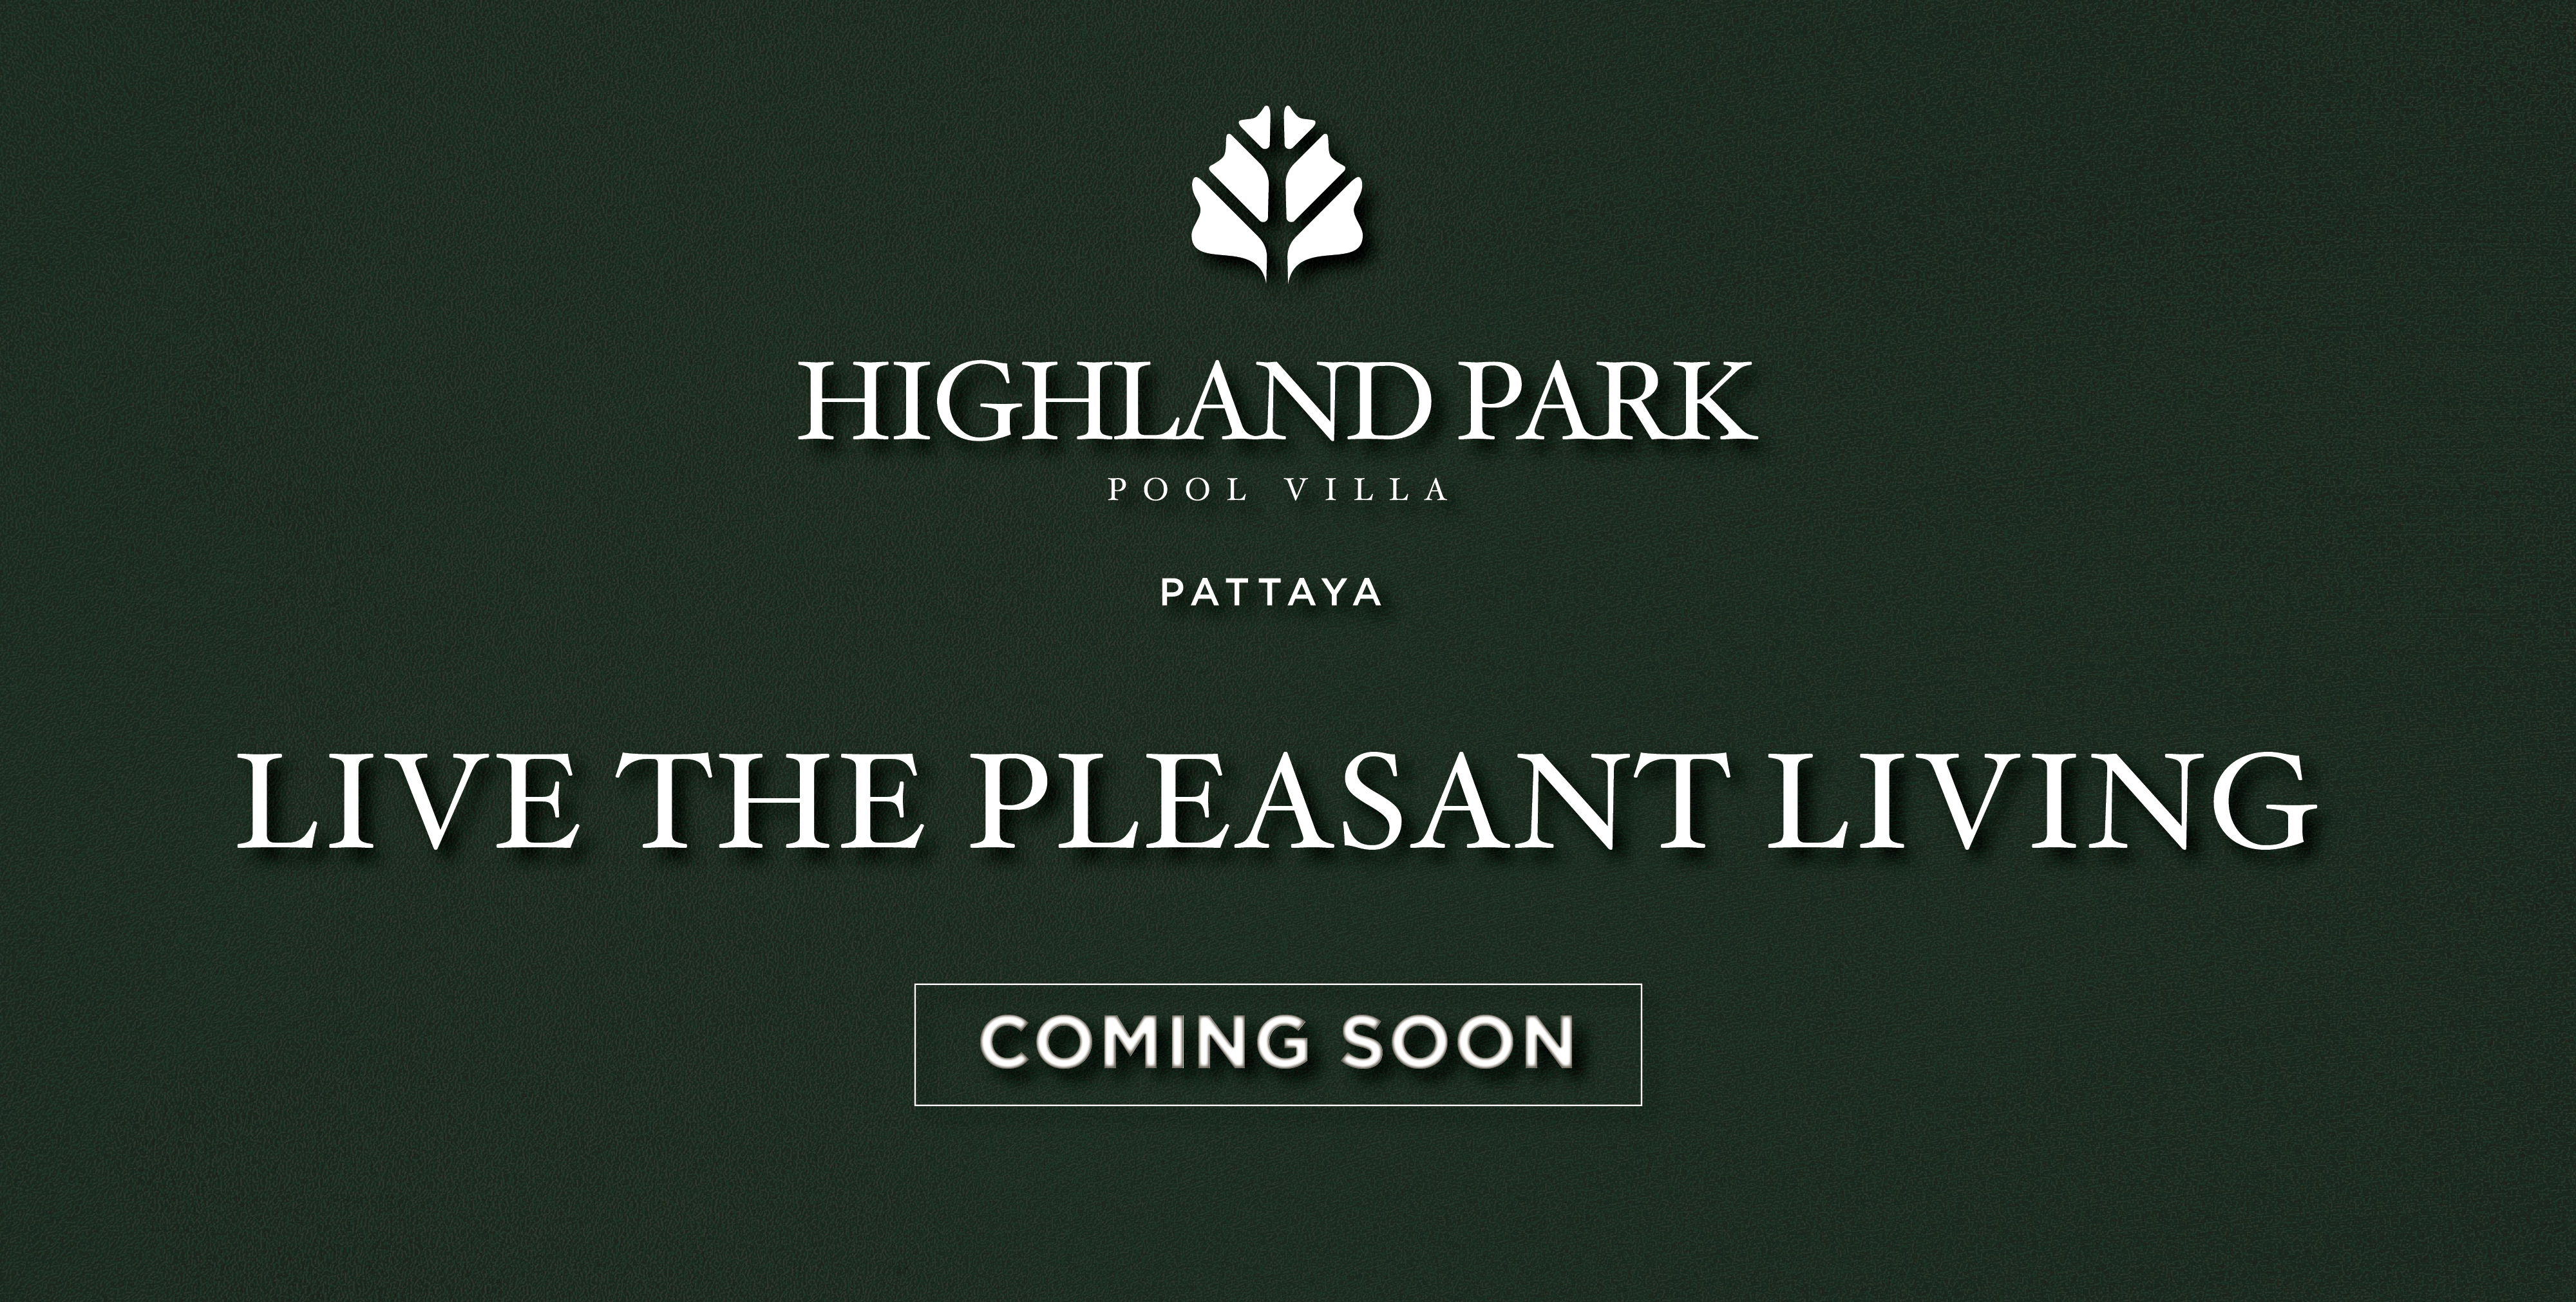 HIGHLAND PARK POOL VILLA PATTAYA Live The Pleasant Living Coming Soon